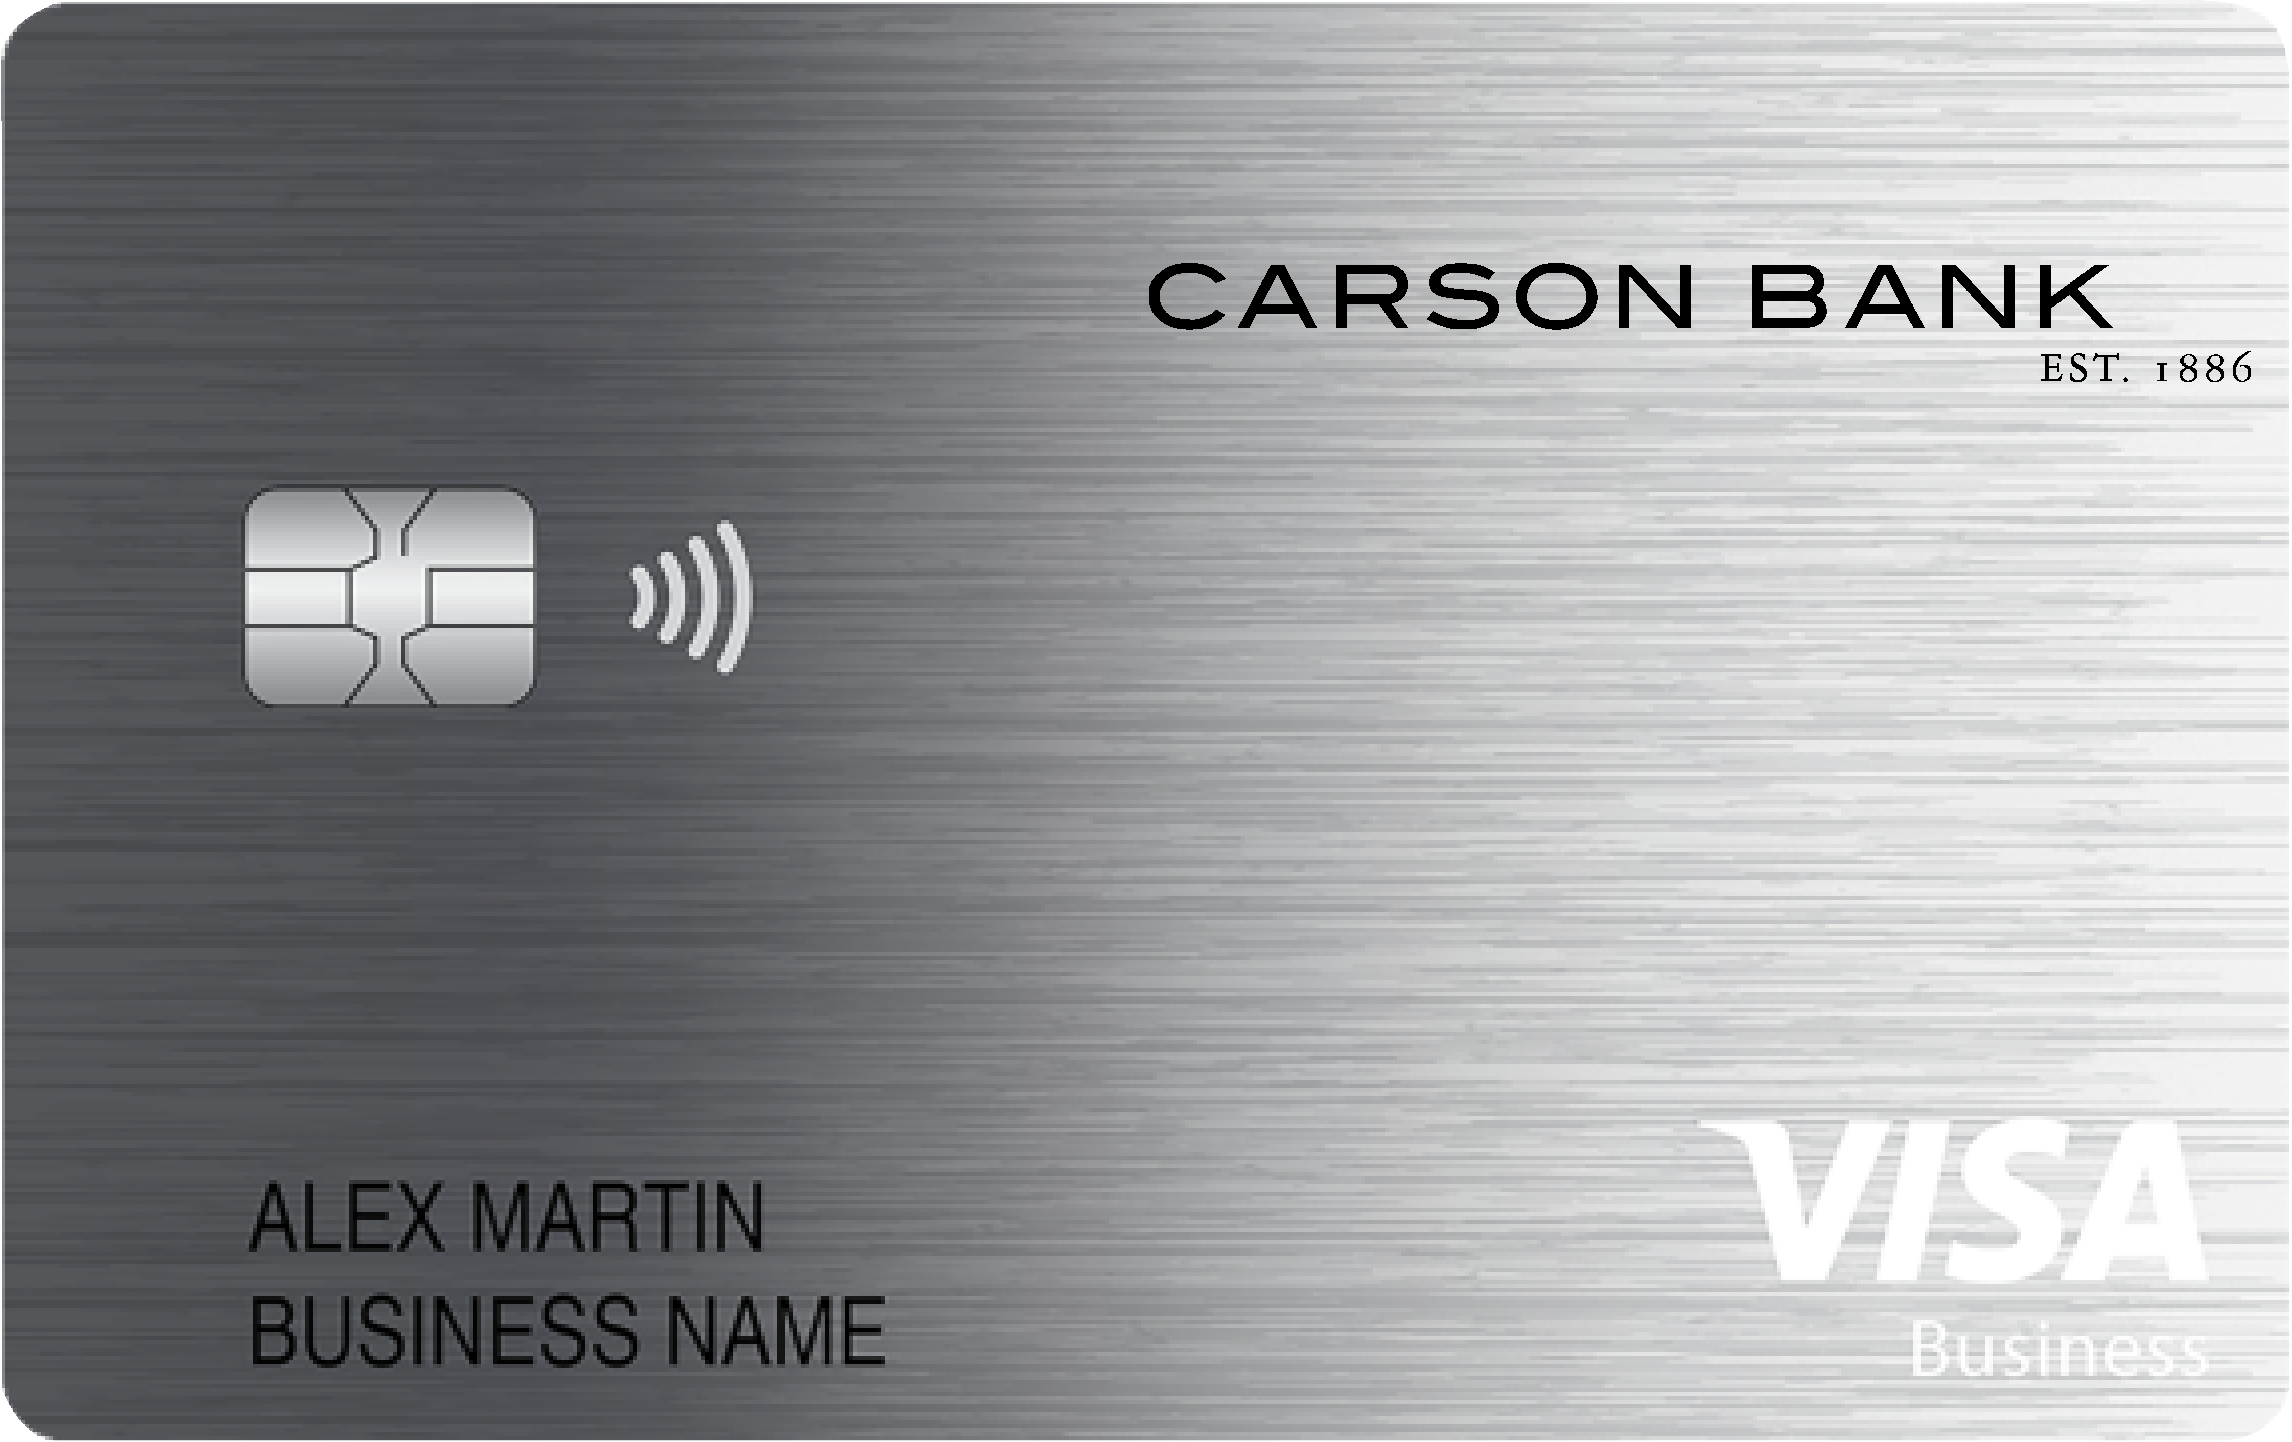 Carson Bank Business Cash Preferred Card